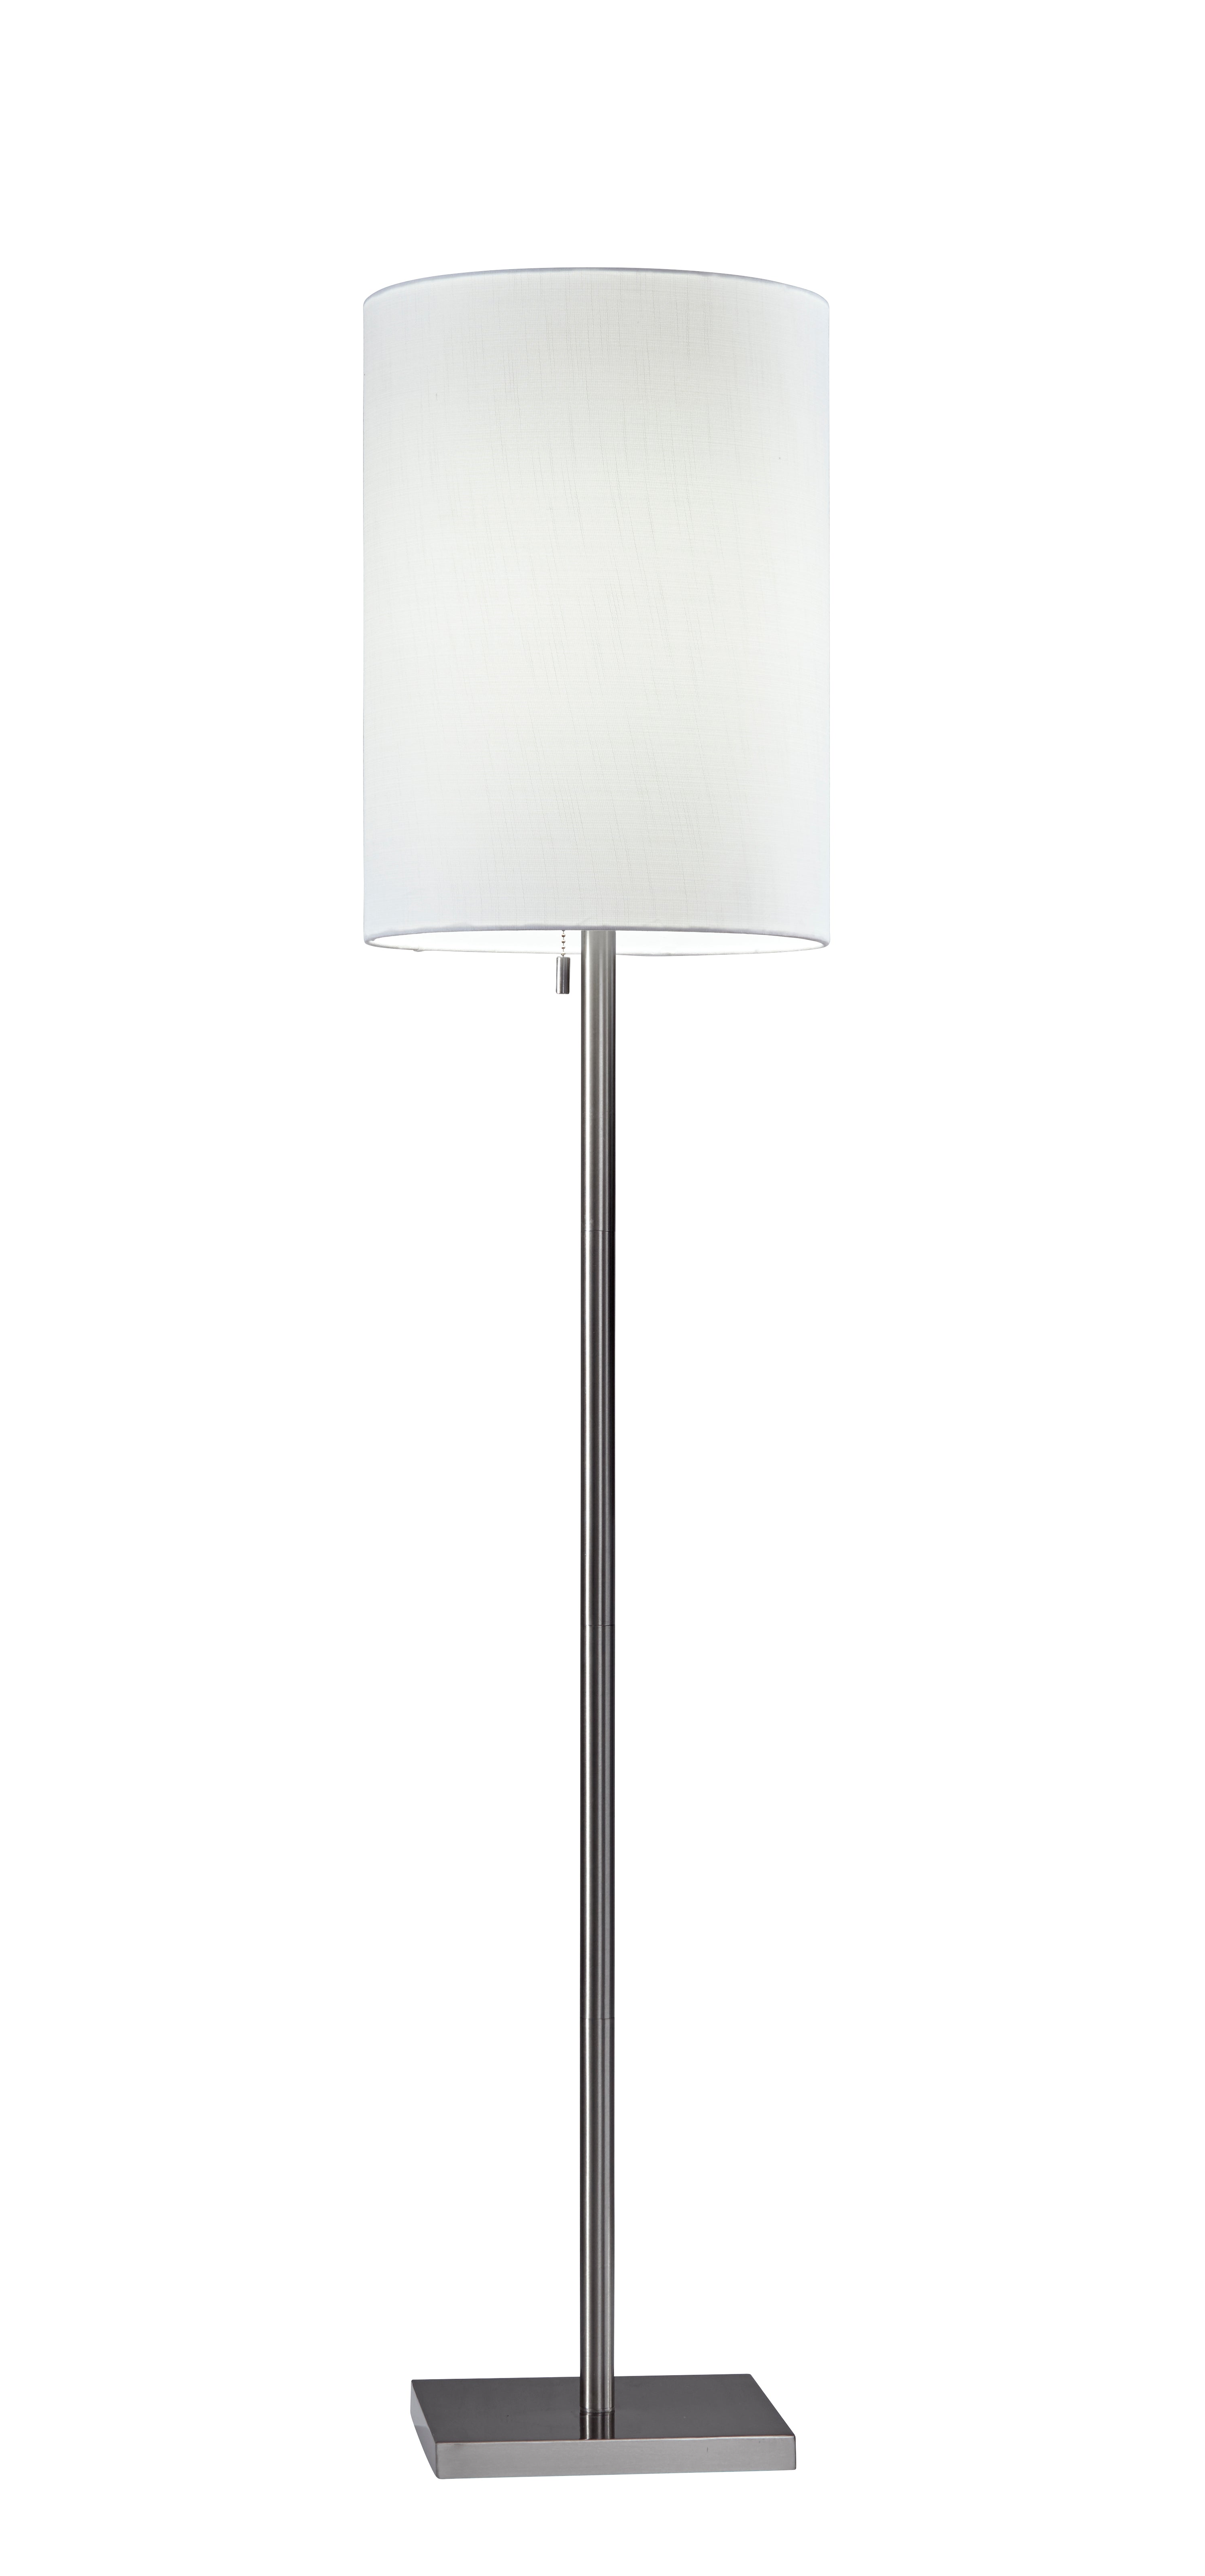 LIAM Floor lamp Stainless steel - 1547-22 | ADESSO